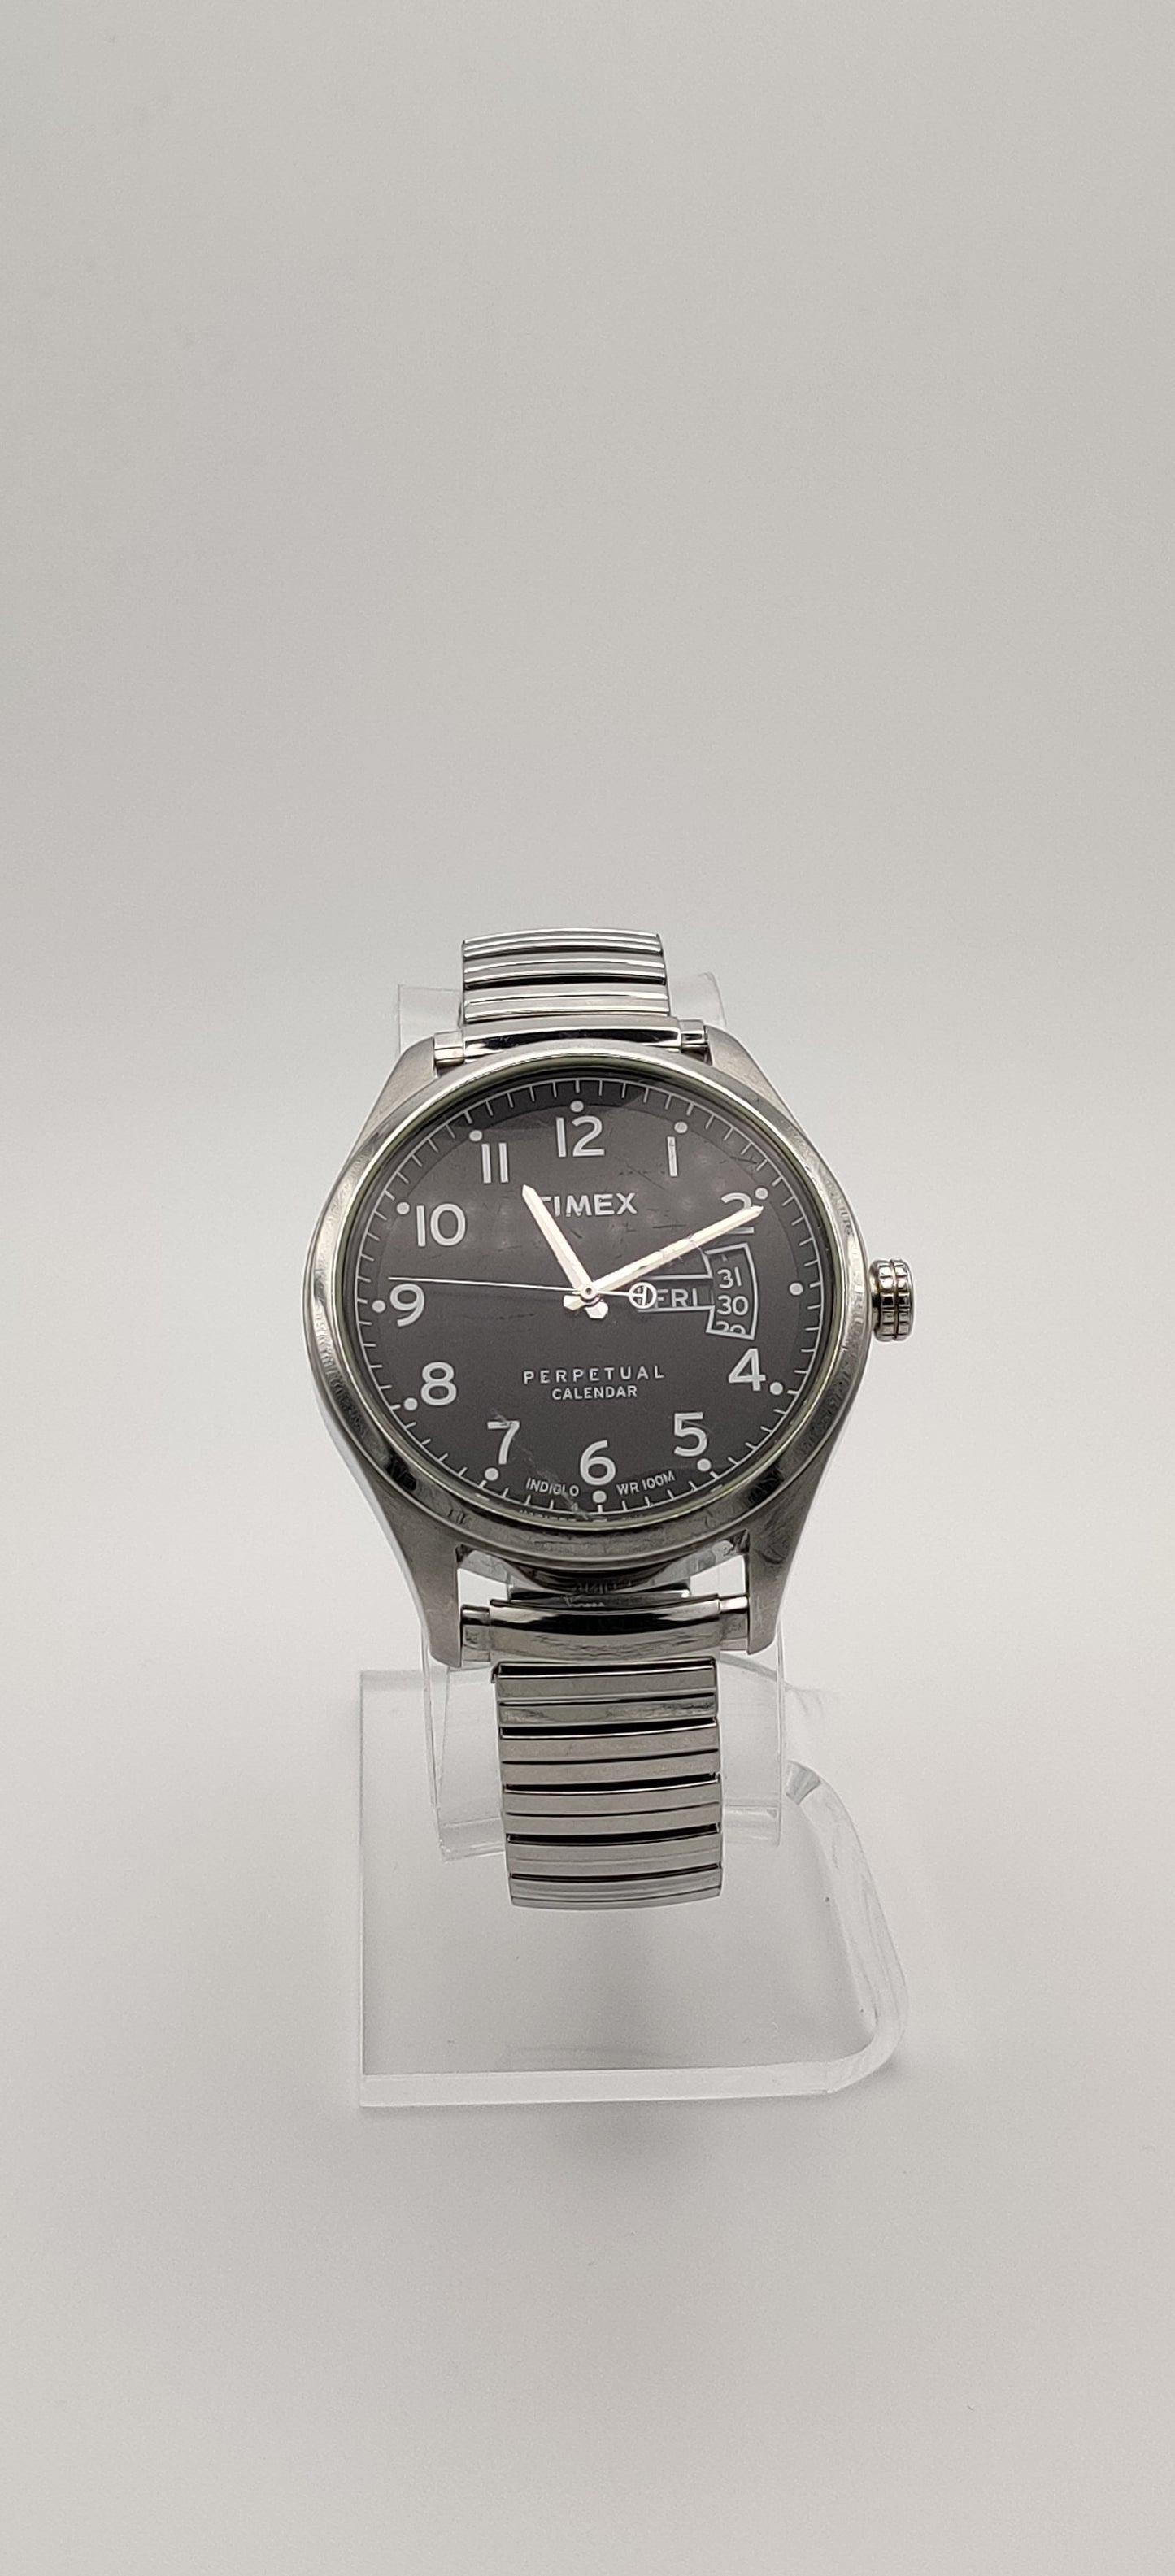 Timex Perpetual Calendar Indiglo Men's Watch